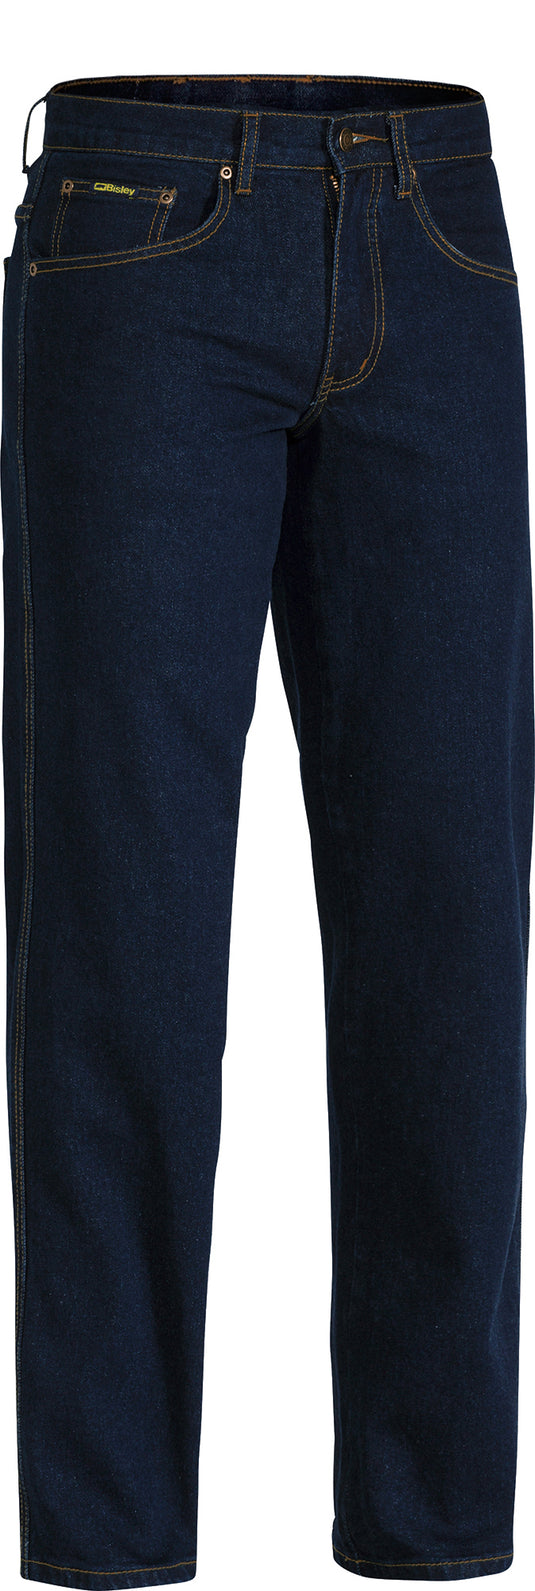 Wholesale BP6712 Bisley Rough Rider Denim Stretch Jeans - Regular Printed or Blank